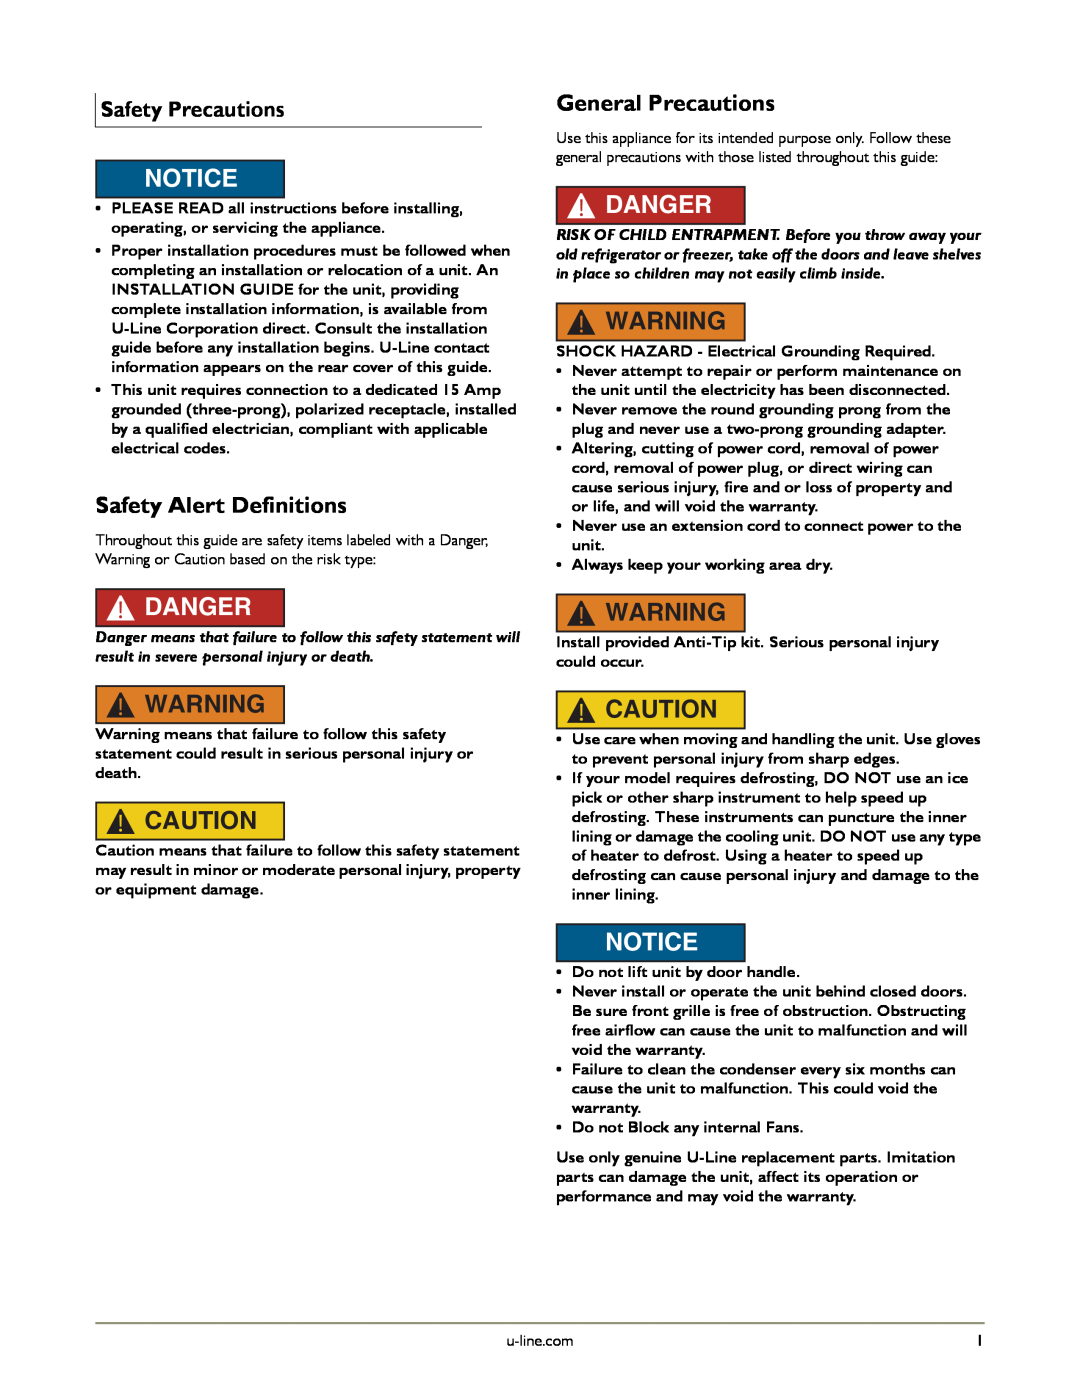 U-Line U-CLR2160B-00, U-CLR2160SOD-41 manual Danger, Safety Alert Definitions, General Precautions, Safety Precautions 